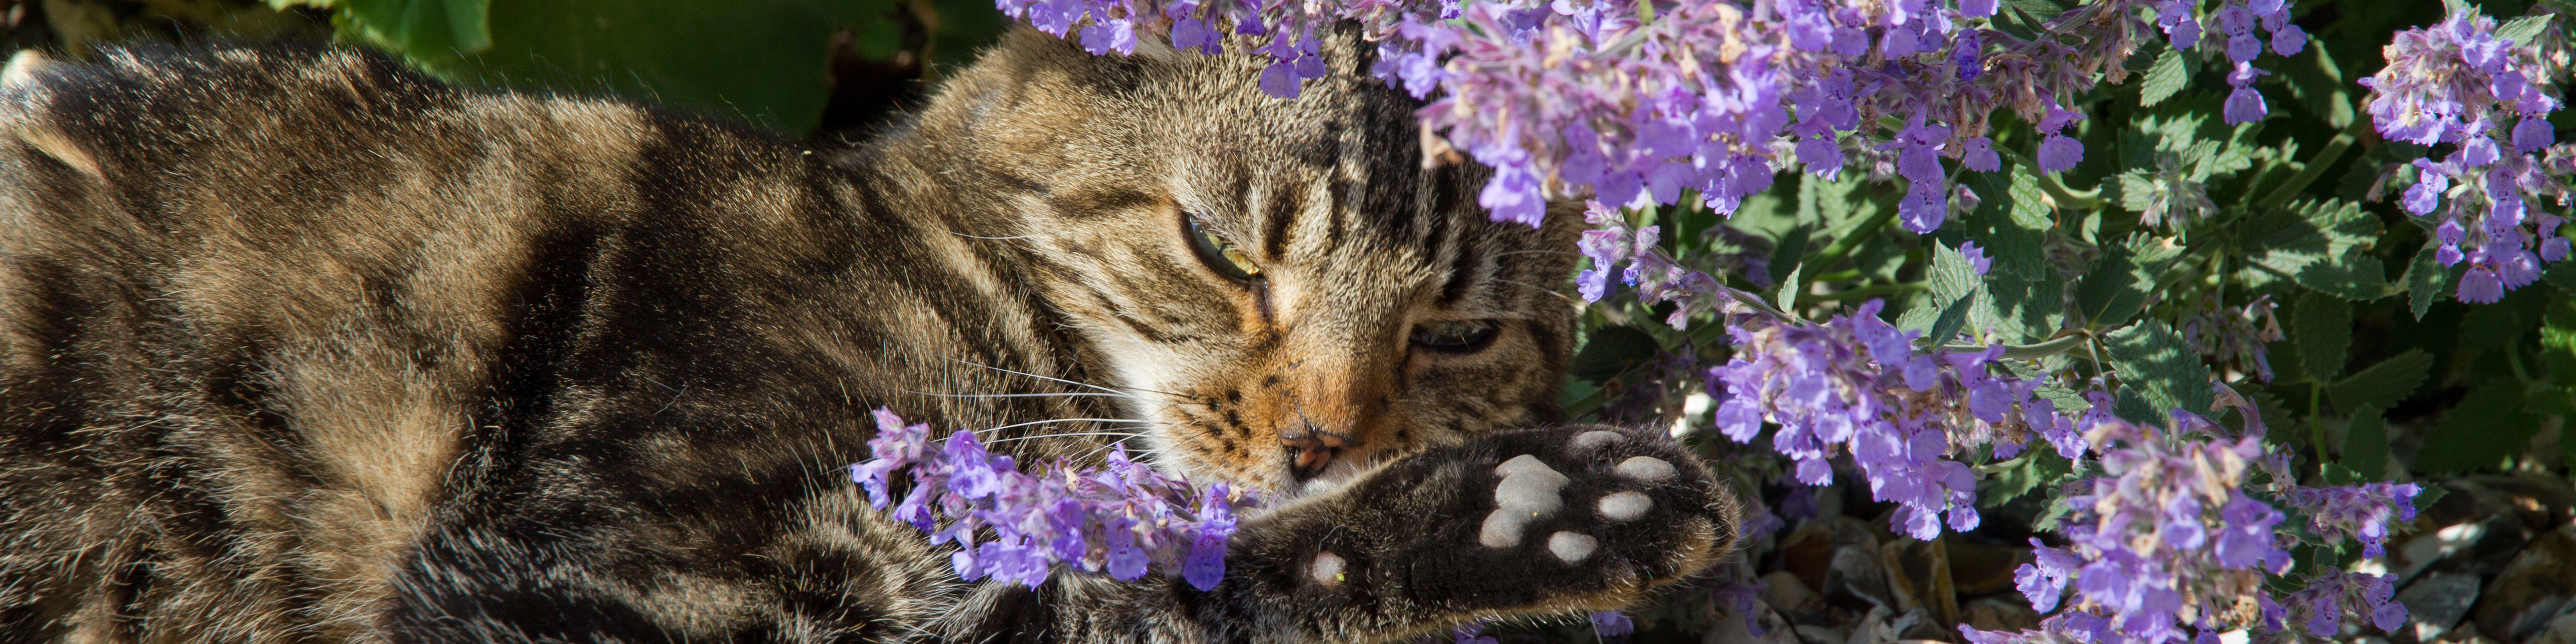 Tabby cat enjoying catnip in sunny summers garden